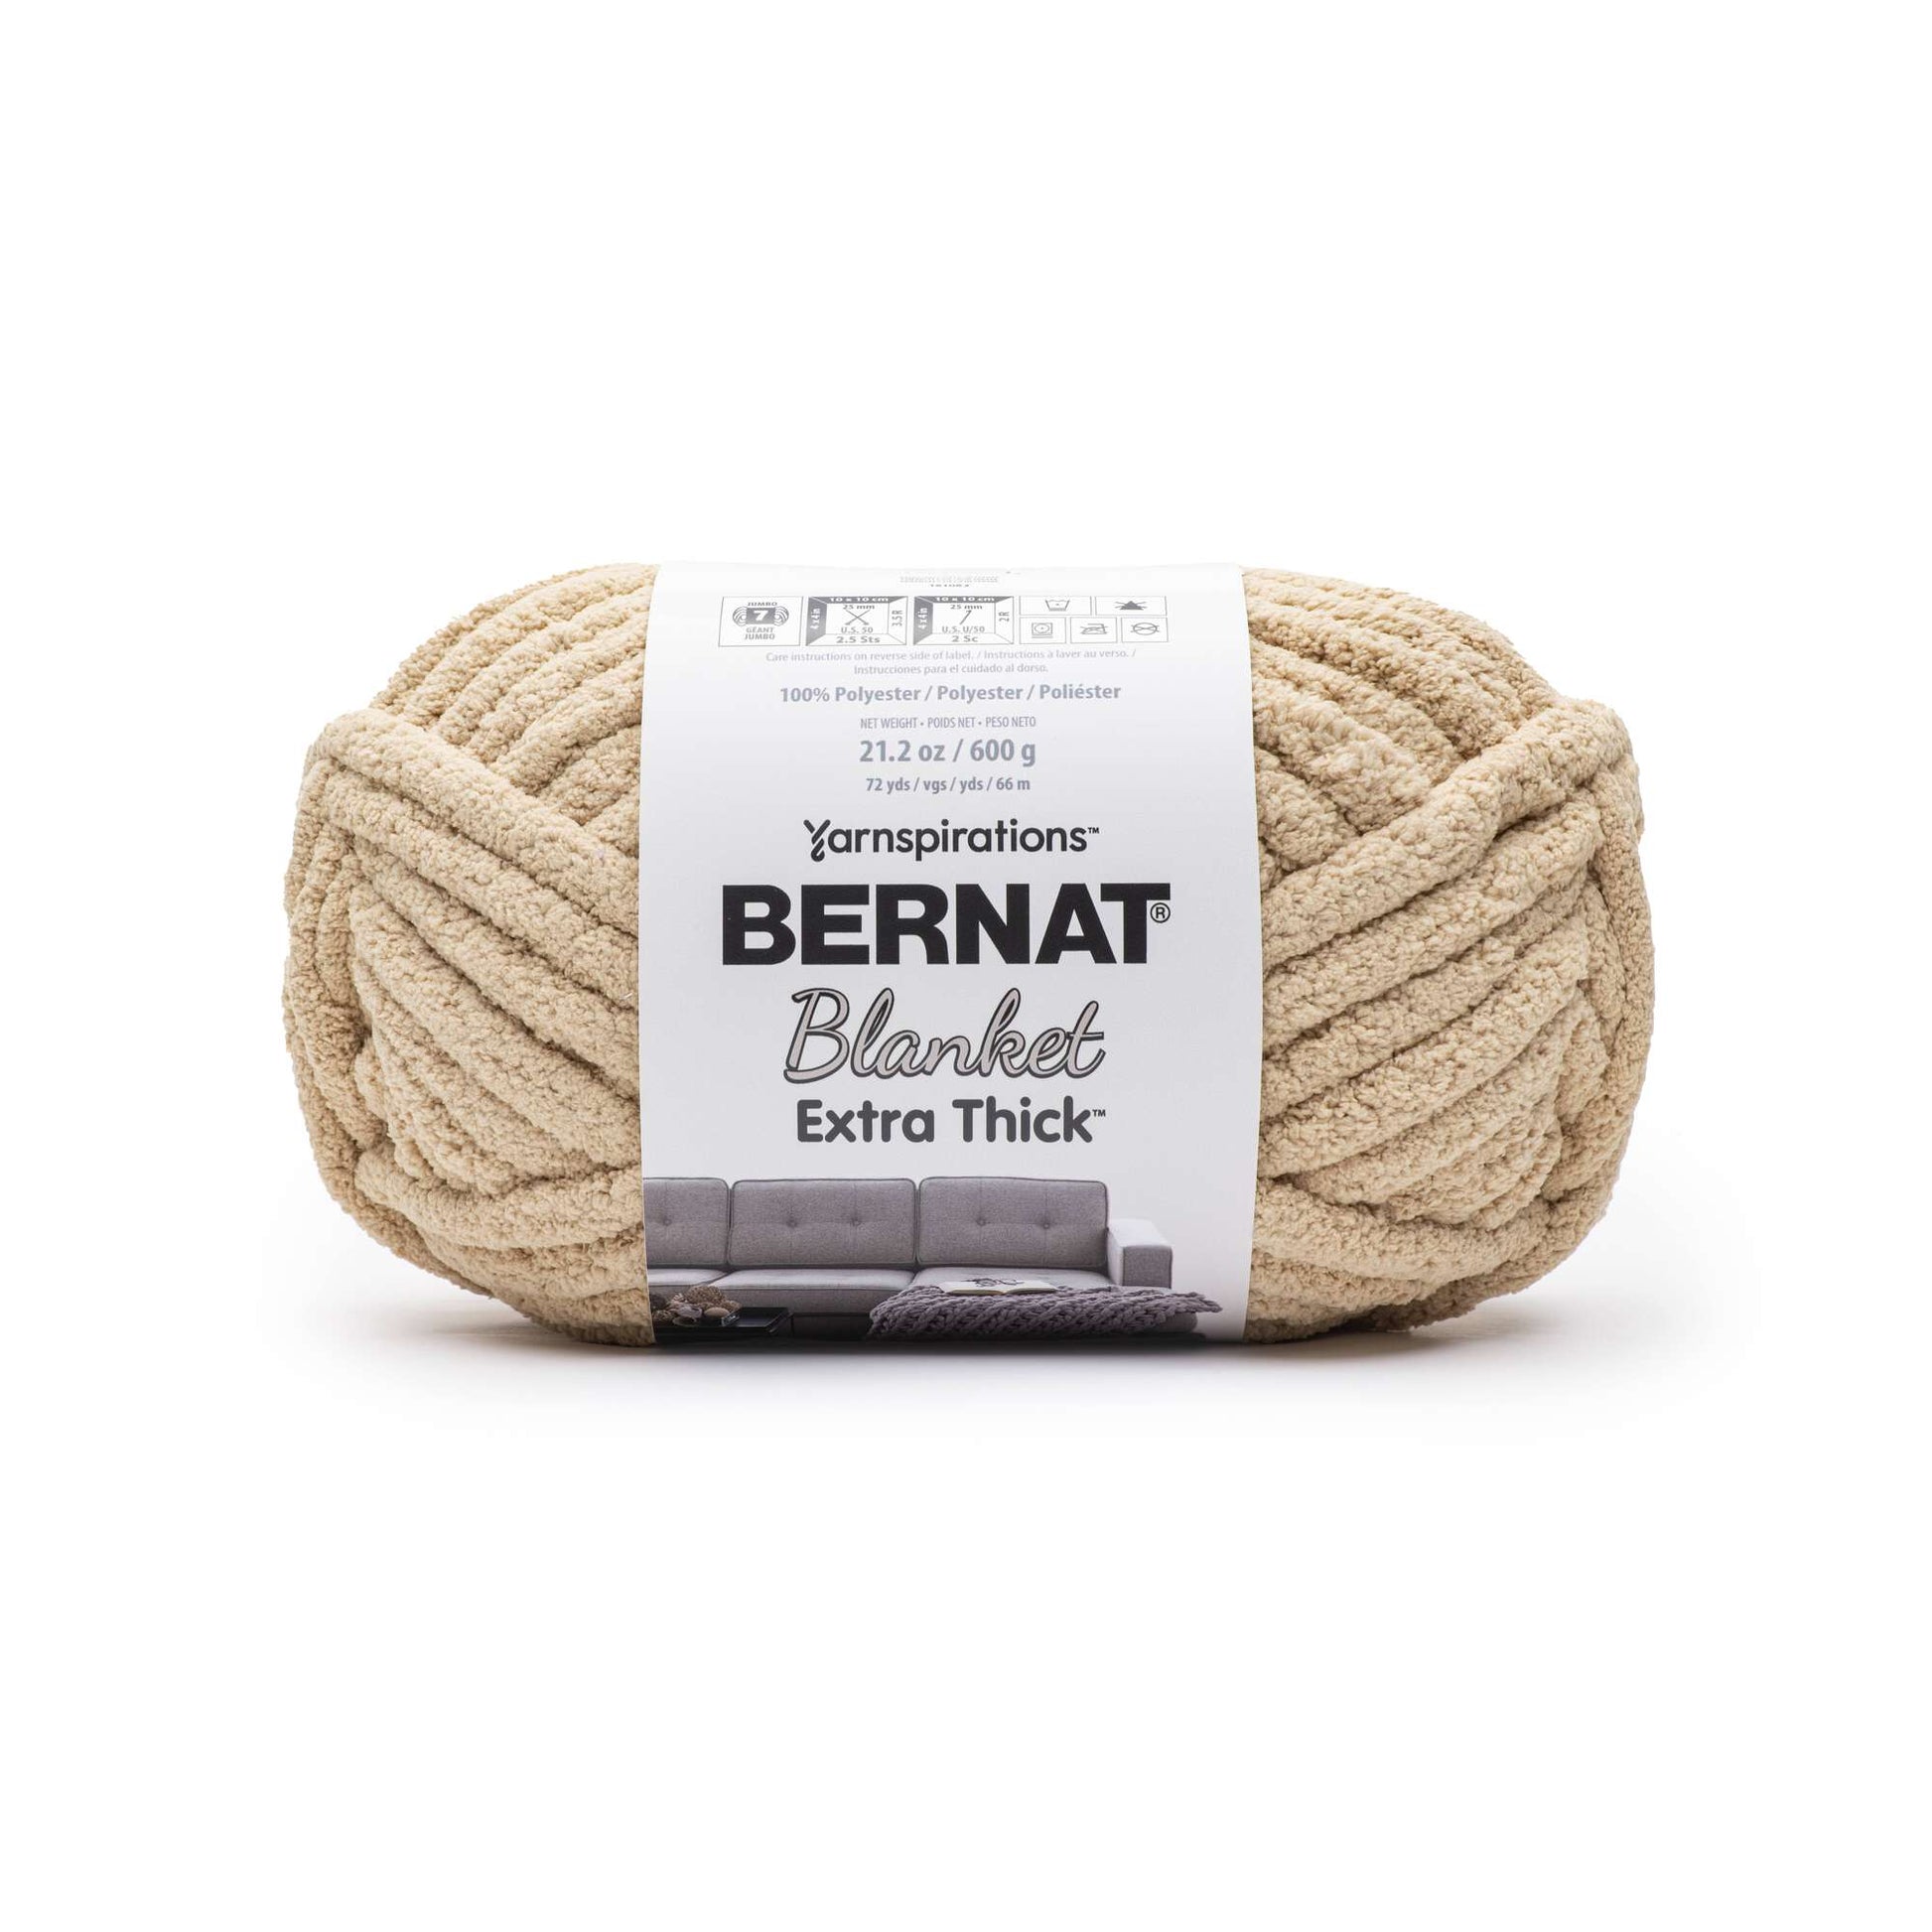 Bernat Blanket Extra Thick Yarn (600g/21.2oz) - Discontinued Shades Bone